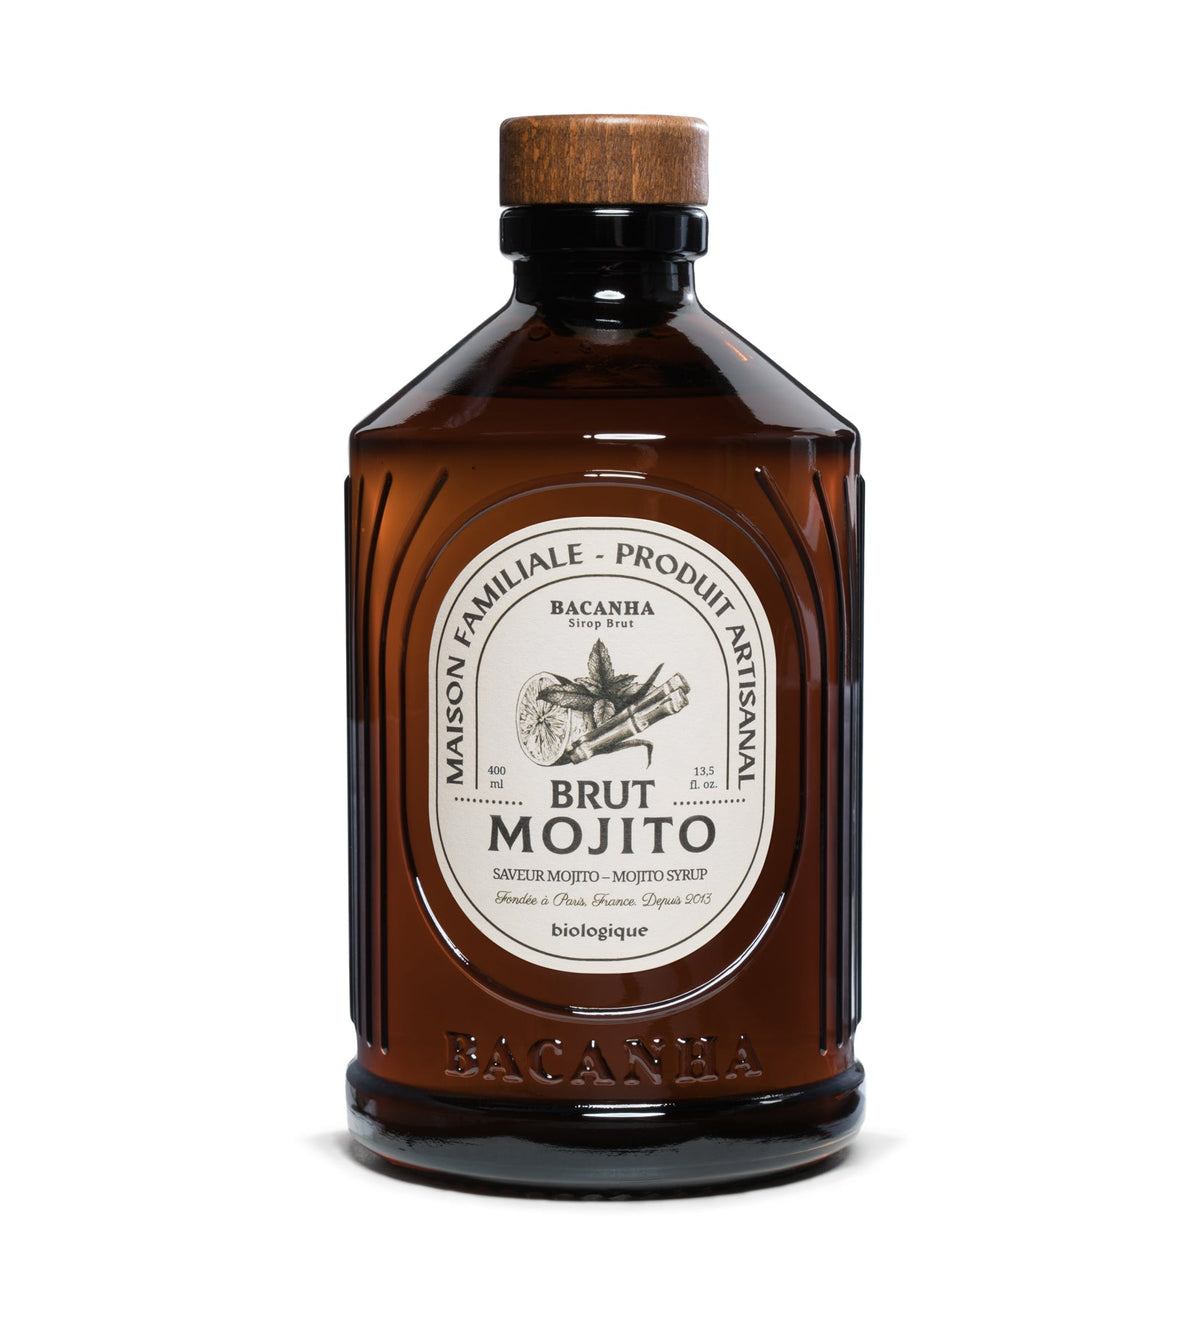 &lt;tc&gt;Bacanha Mojito flavored syrup [ORGANIC]&lt;/tc&gt;